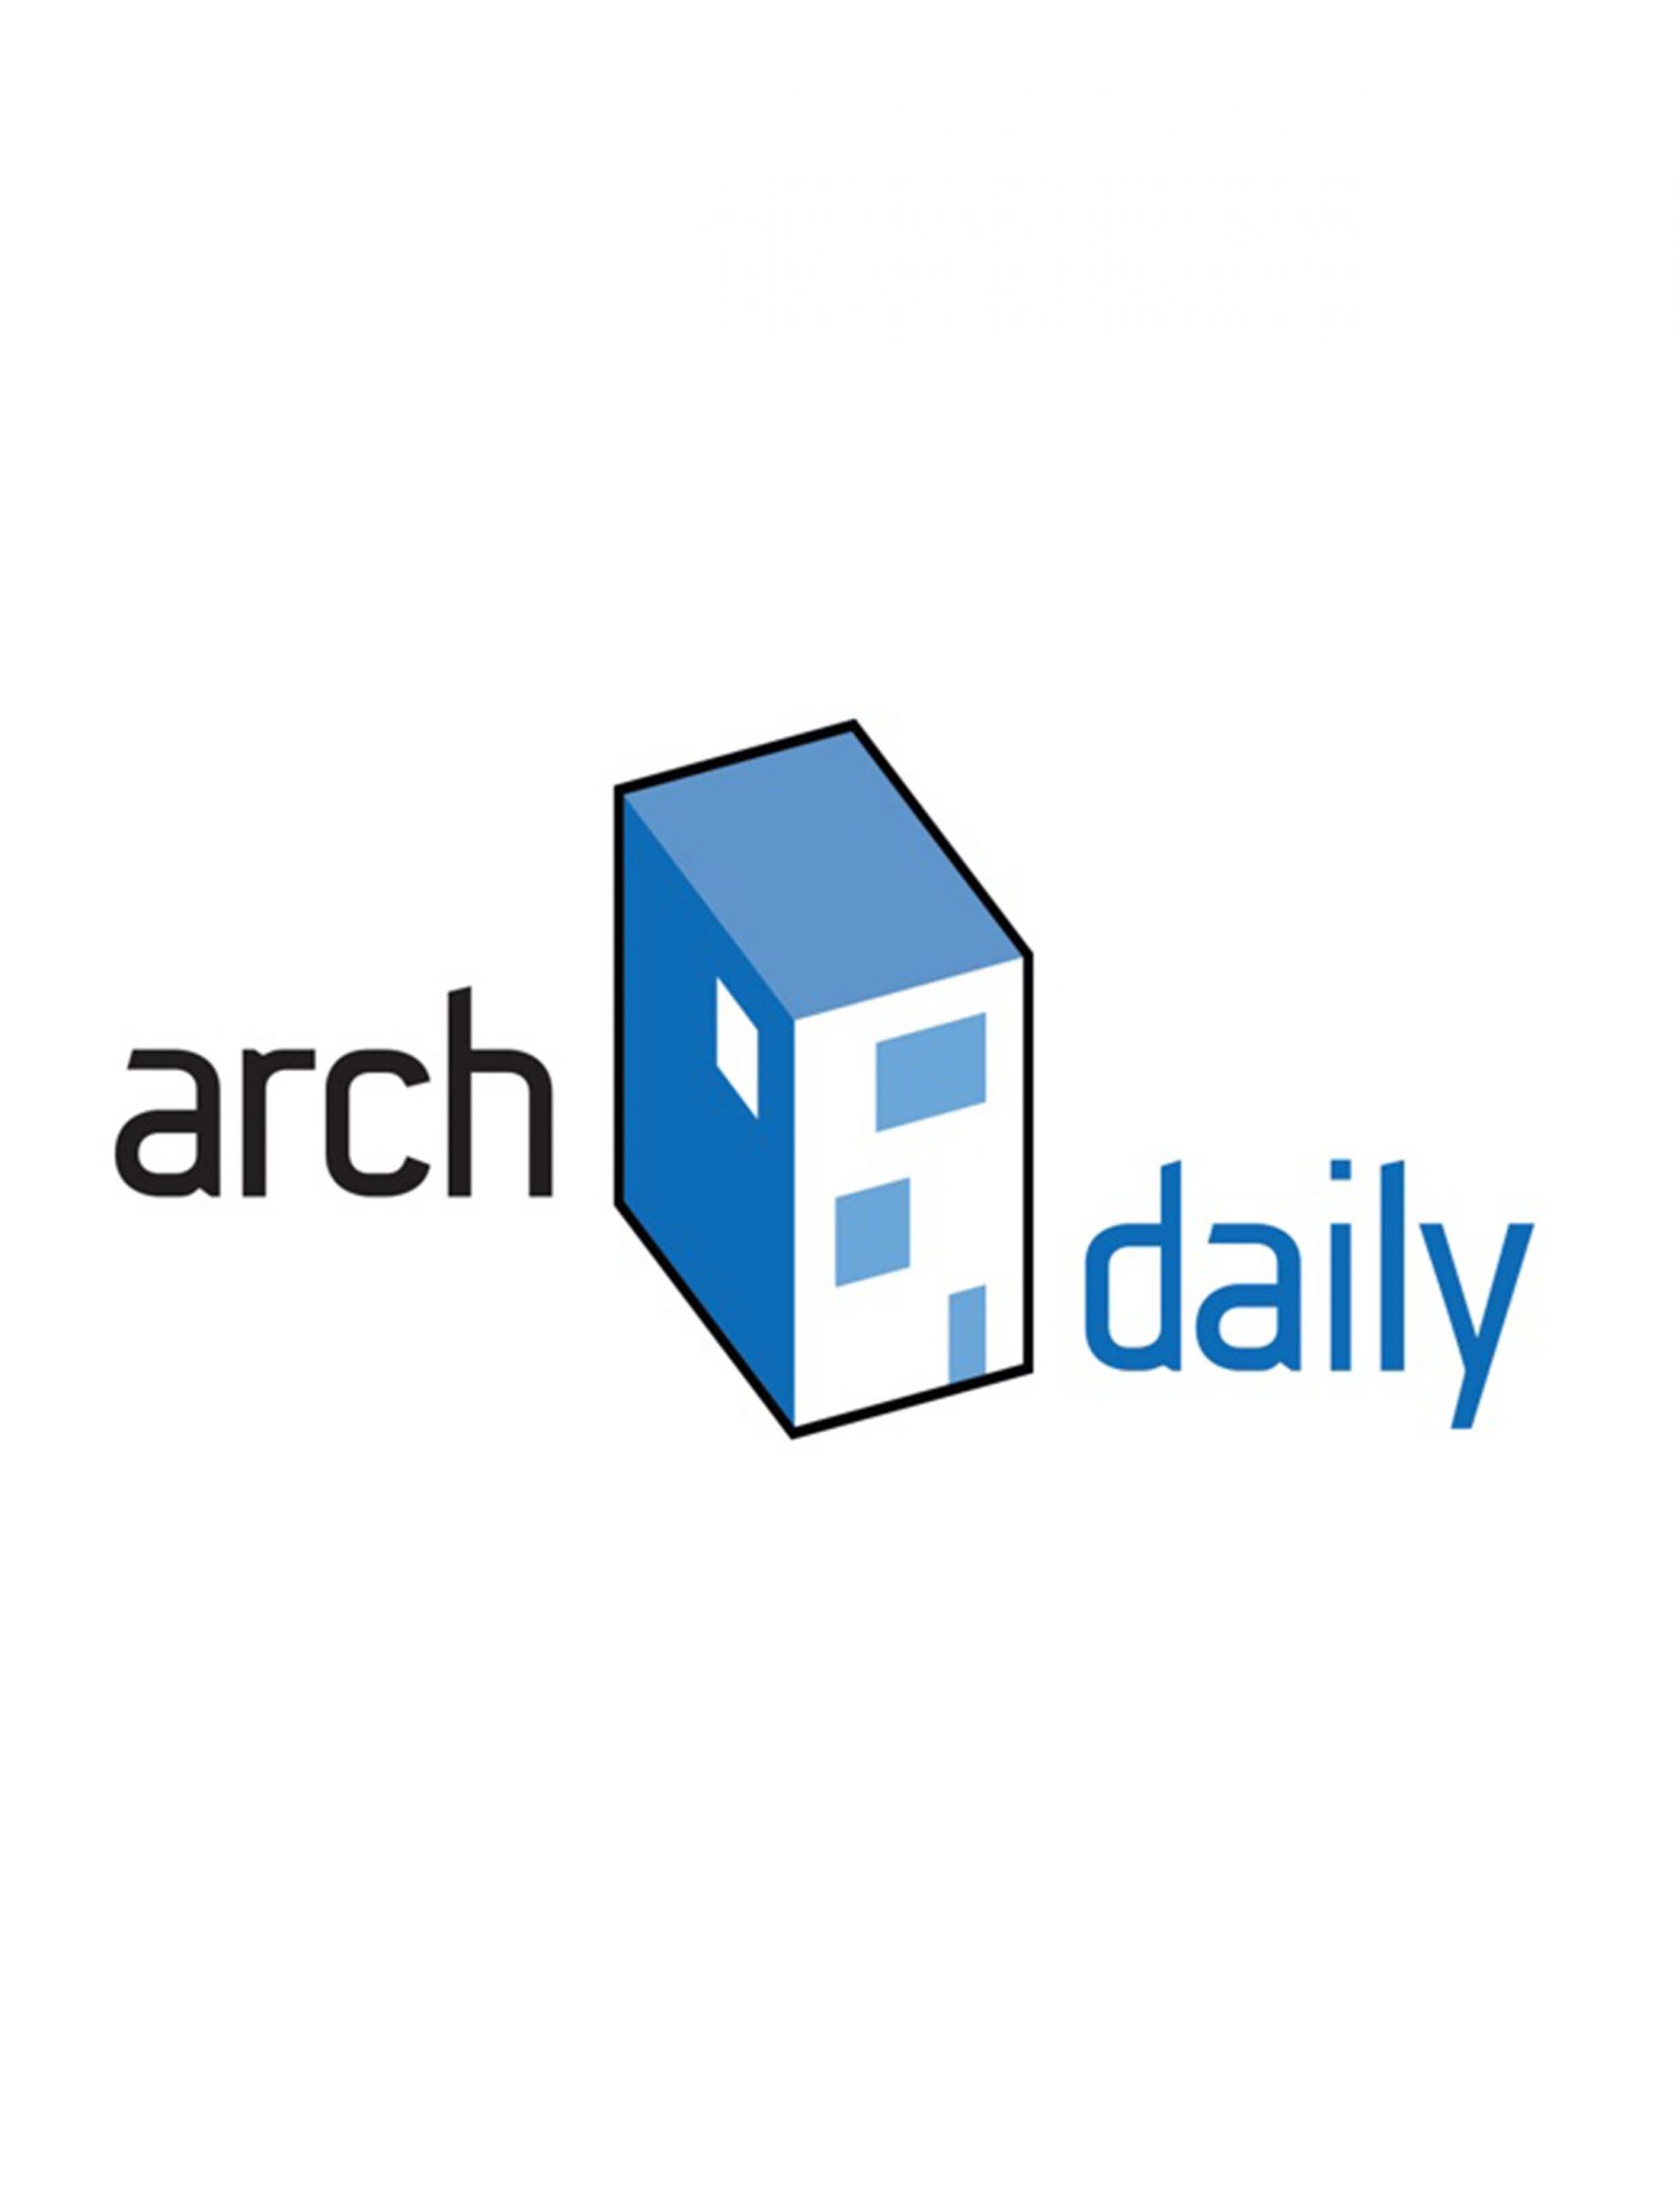 Arch daily portrait image